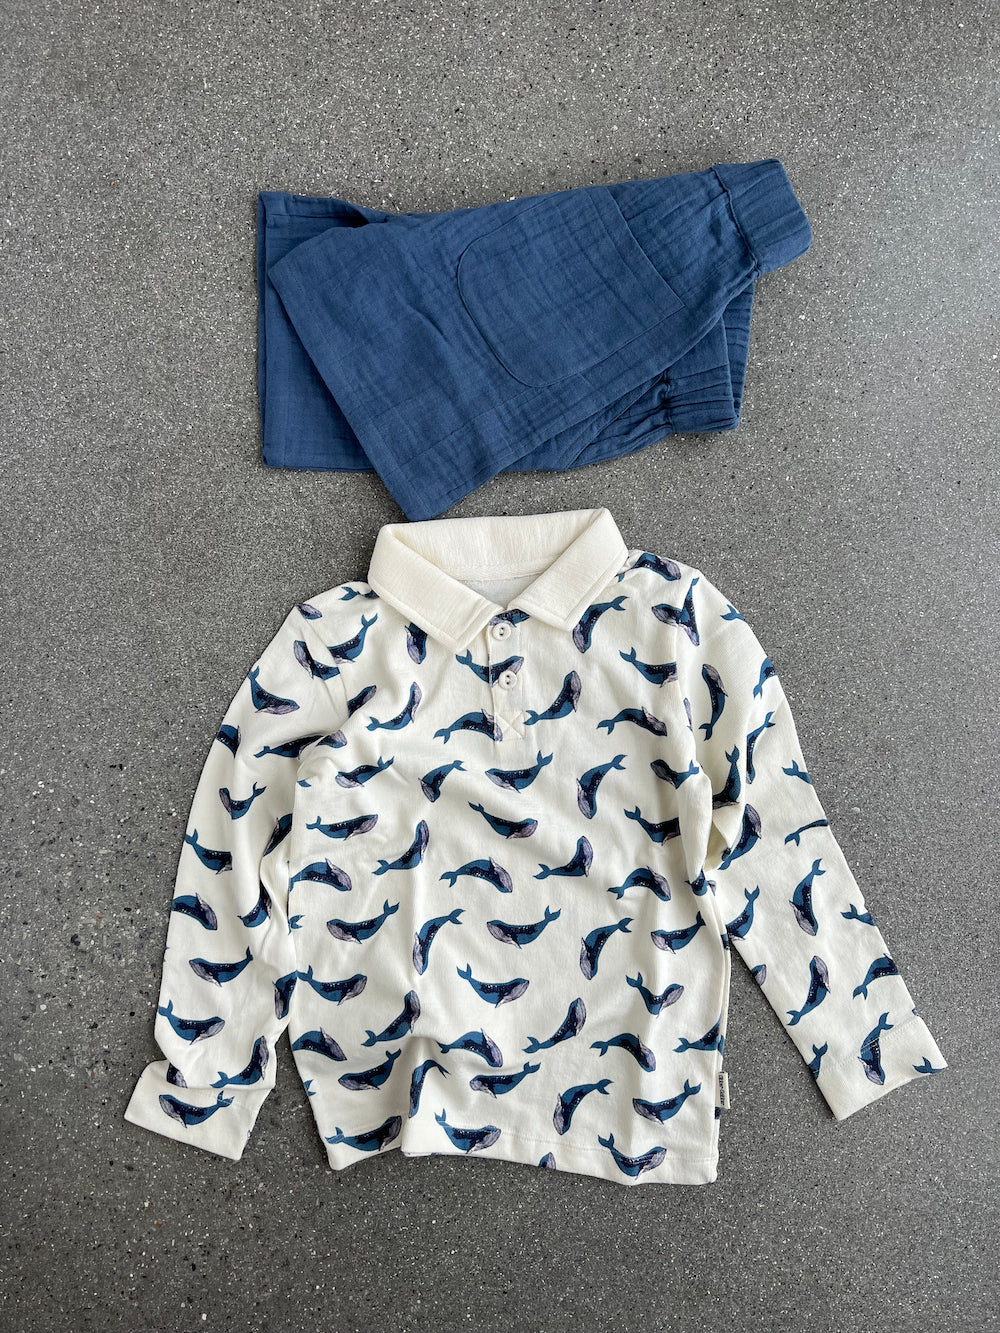 Muslin shorts - coronet blue